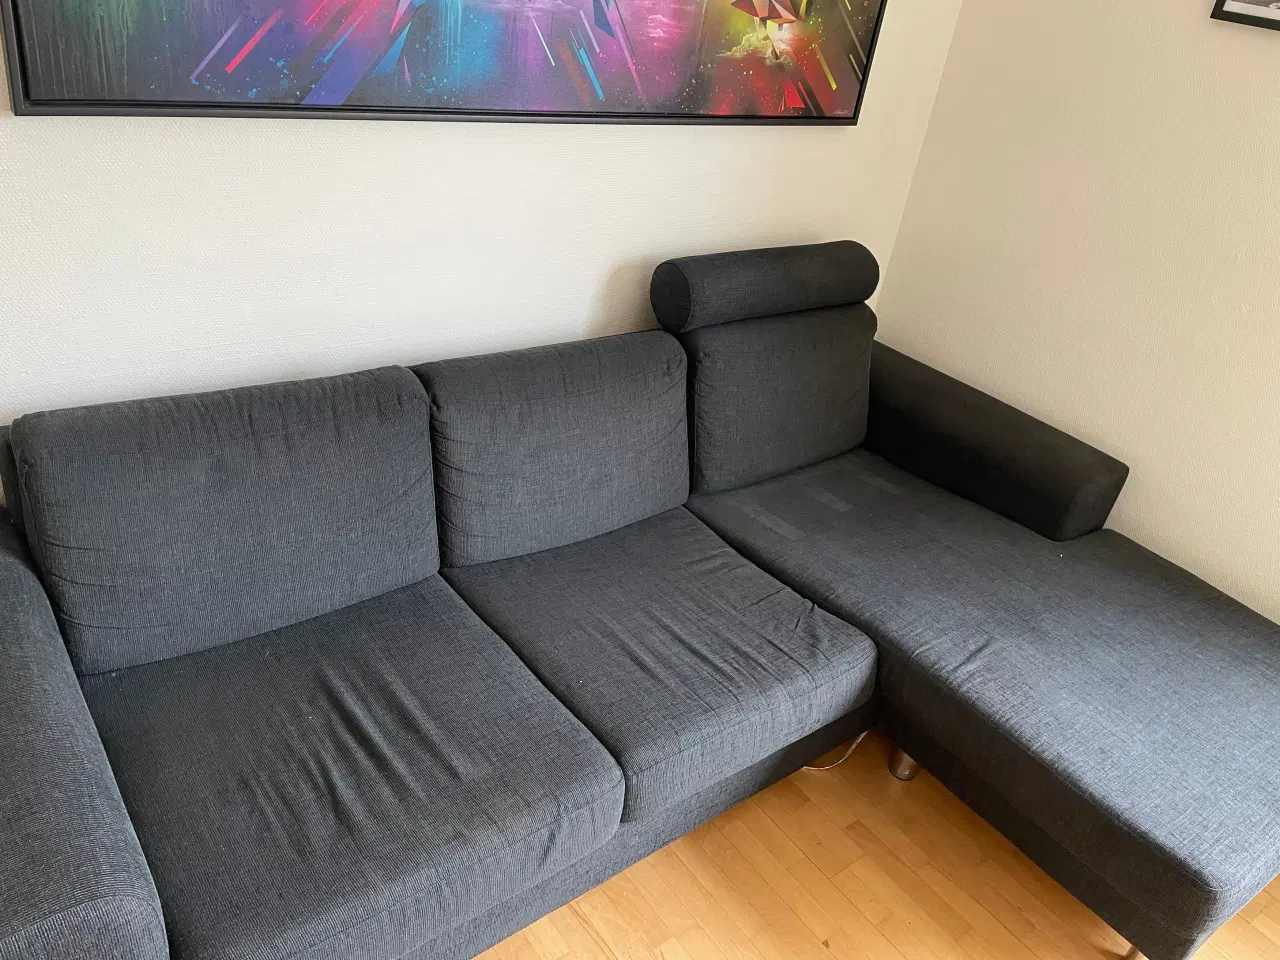 Billede 3 - 3 pers chaiselong sofa